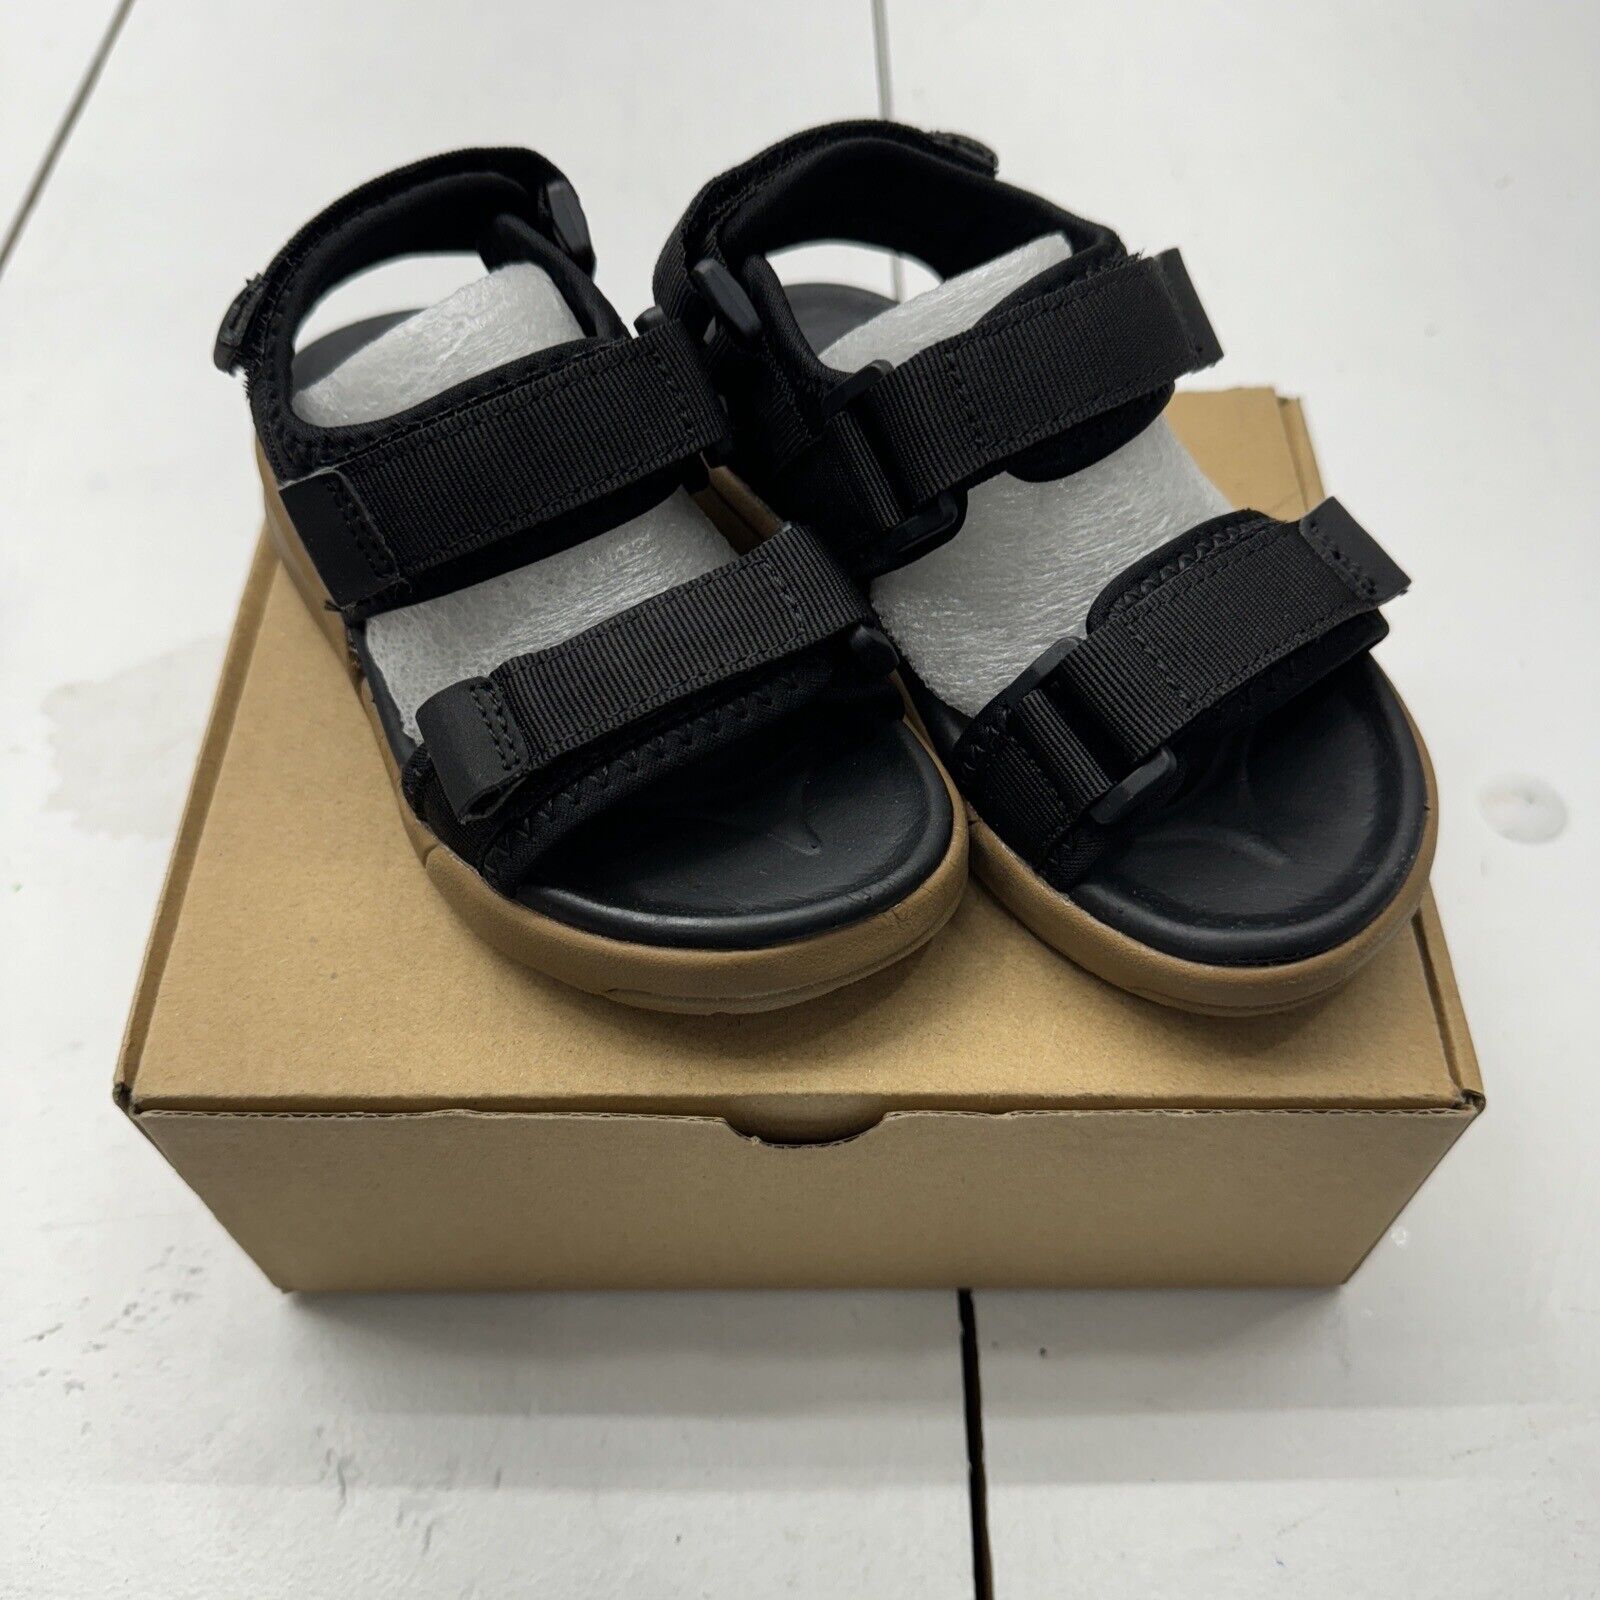 Kuling Black Mollösund Open Toe Sandals Canvas Straps Kids Size 25cm US Size 7